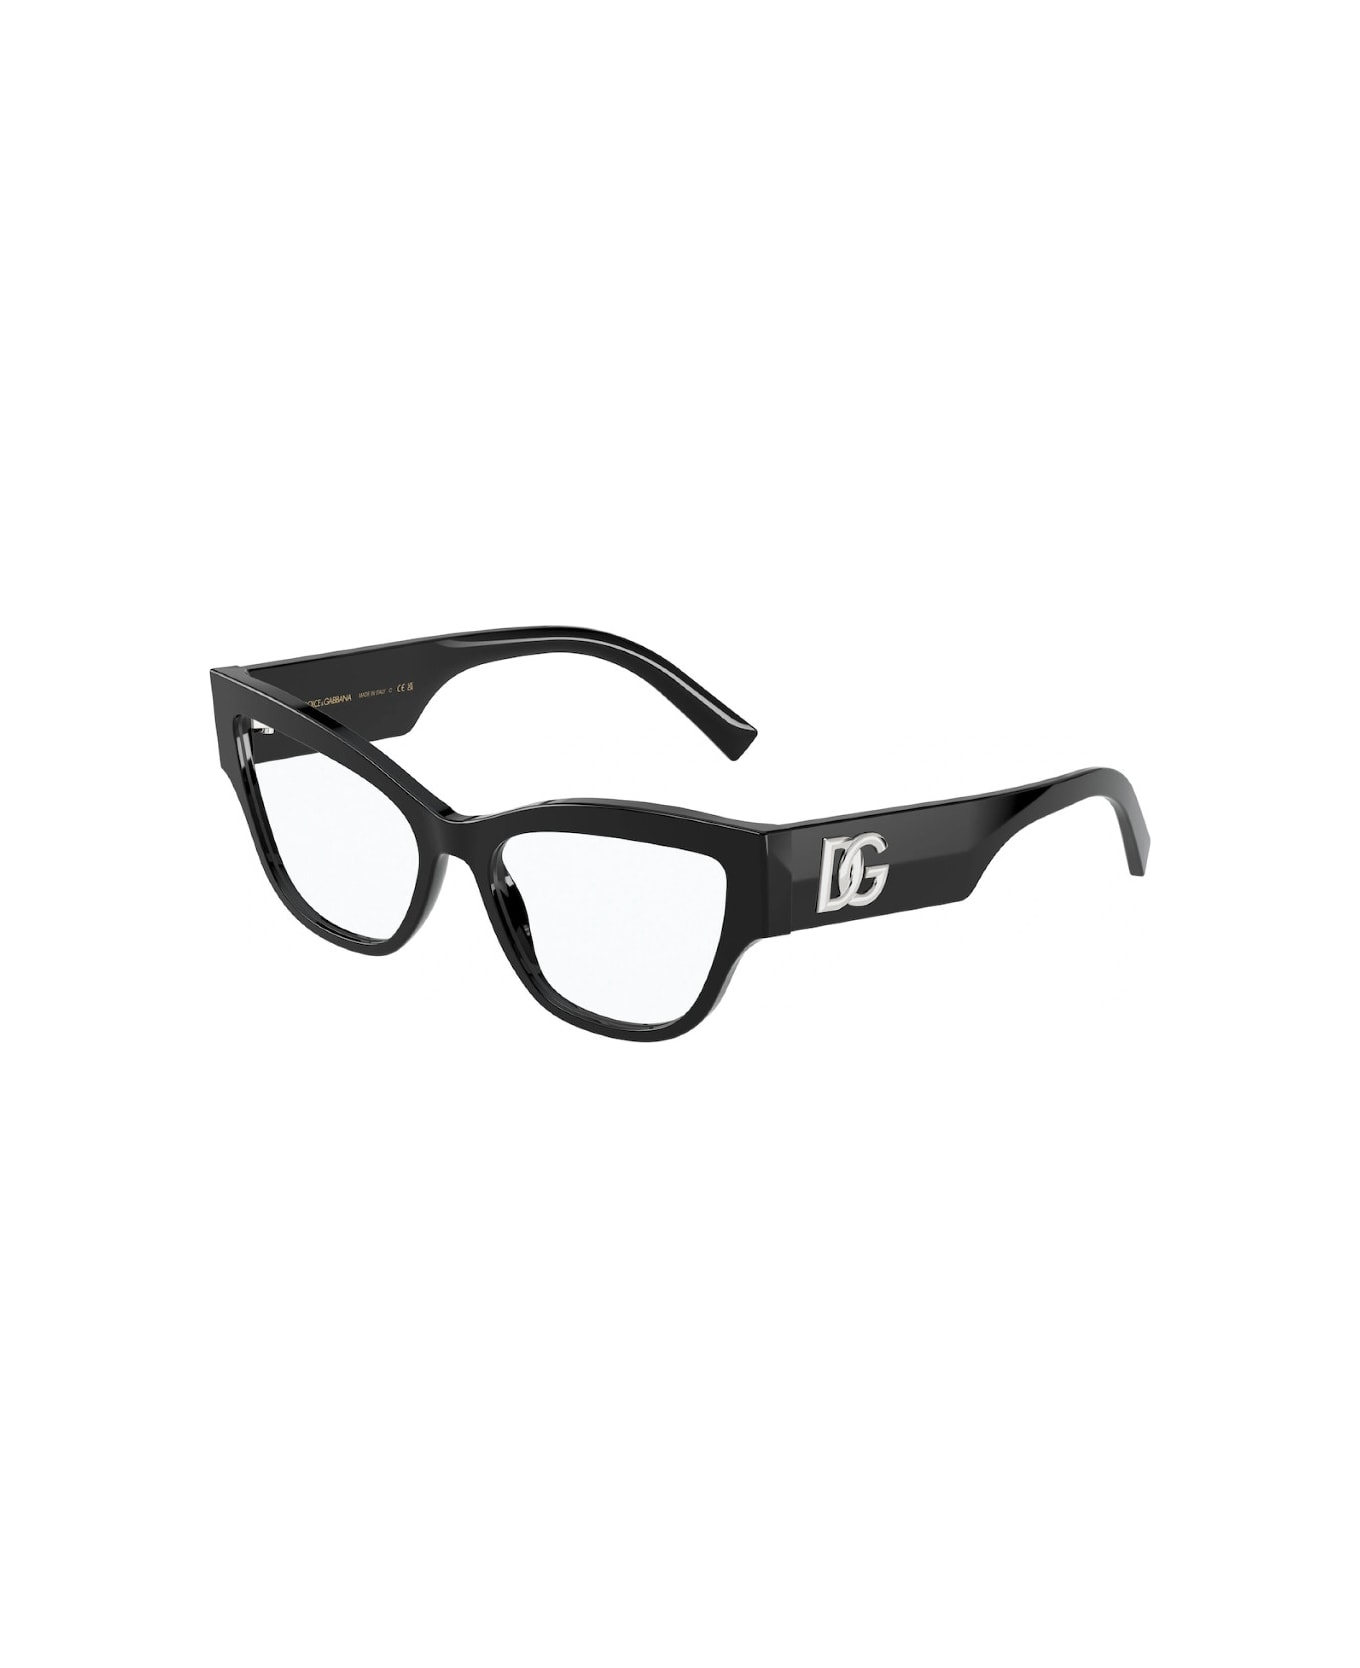 Dolce & Gabbana Eyewear DG3378 501 Glasses